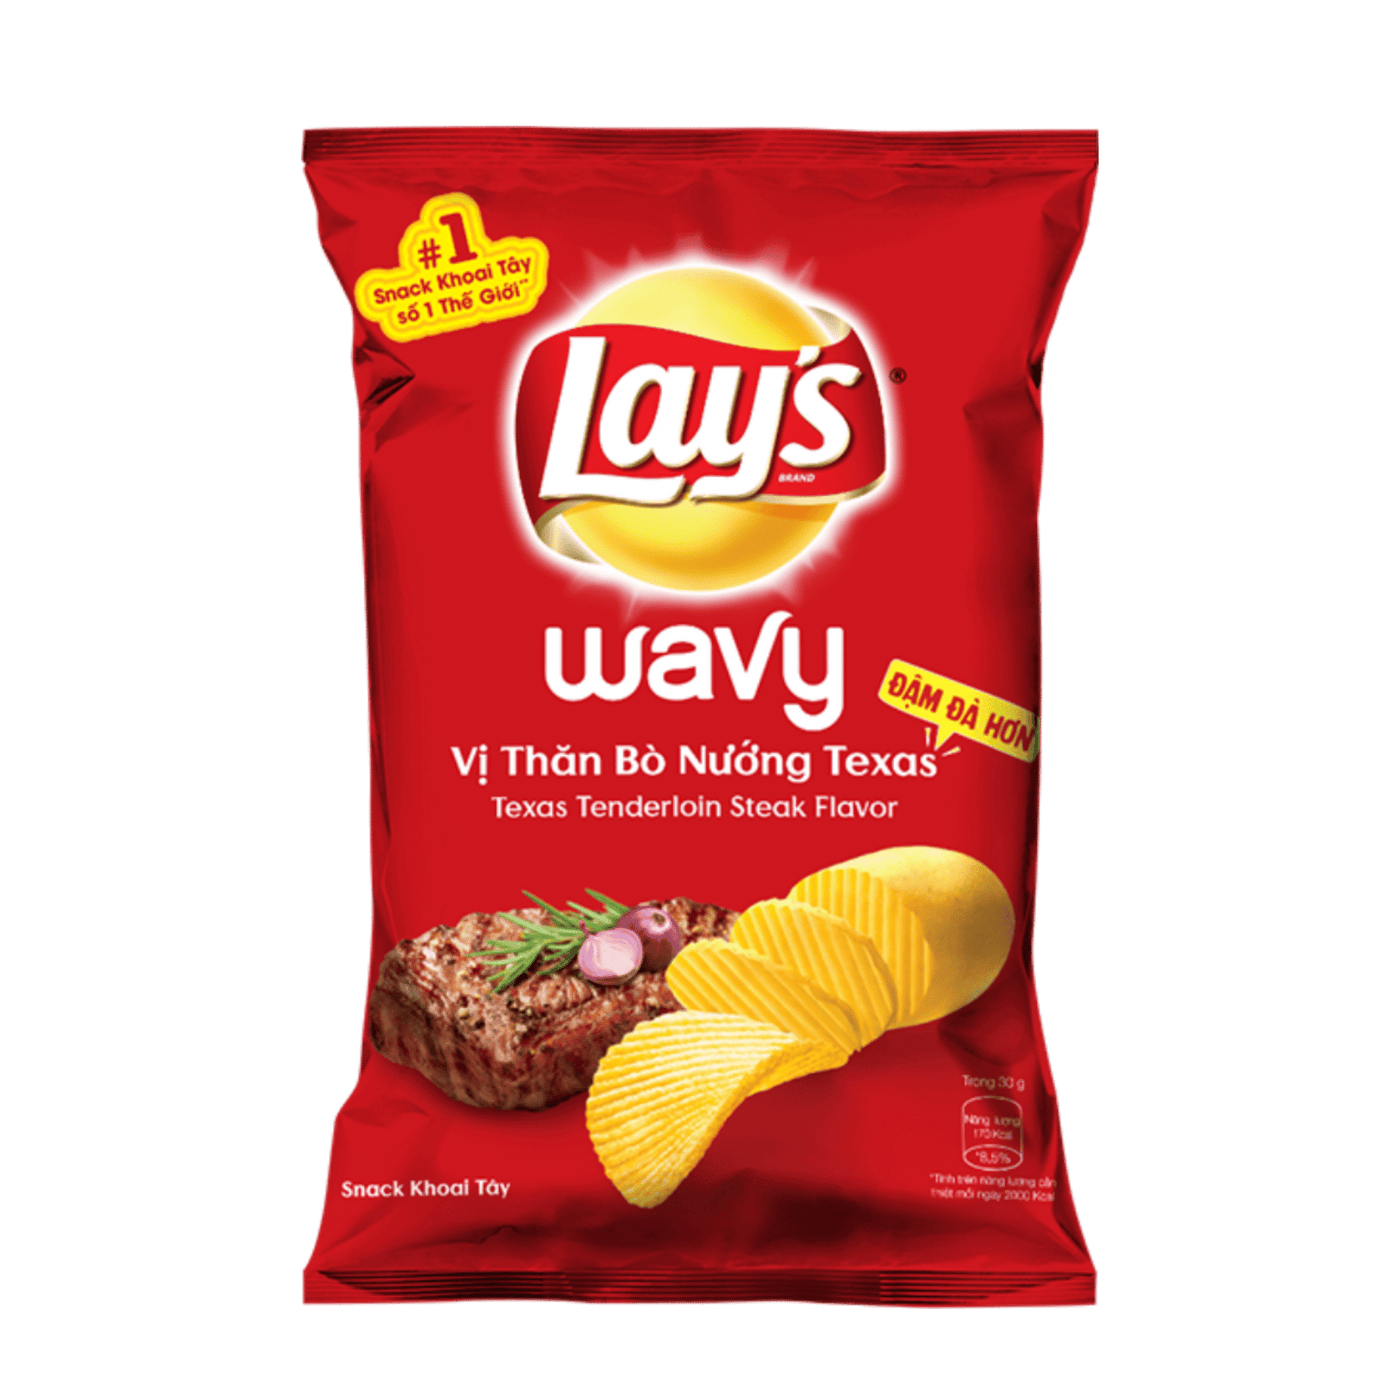 Lay's Chips - Vietnam